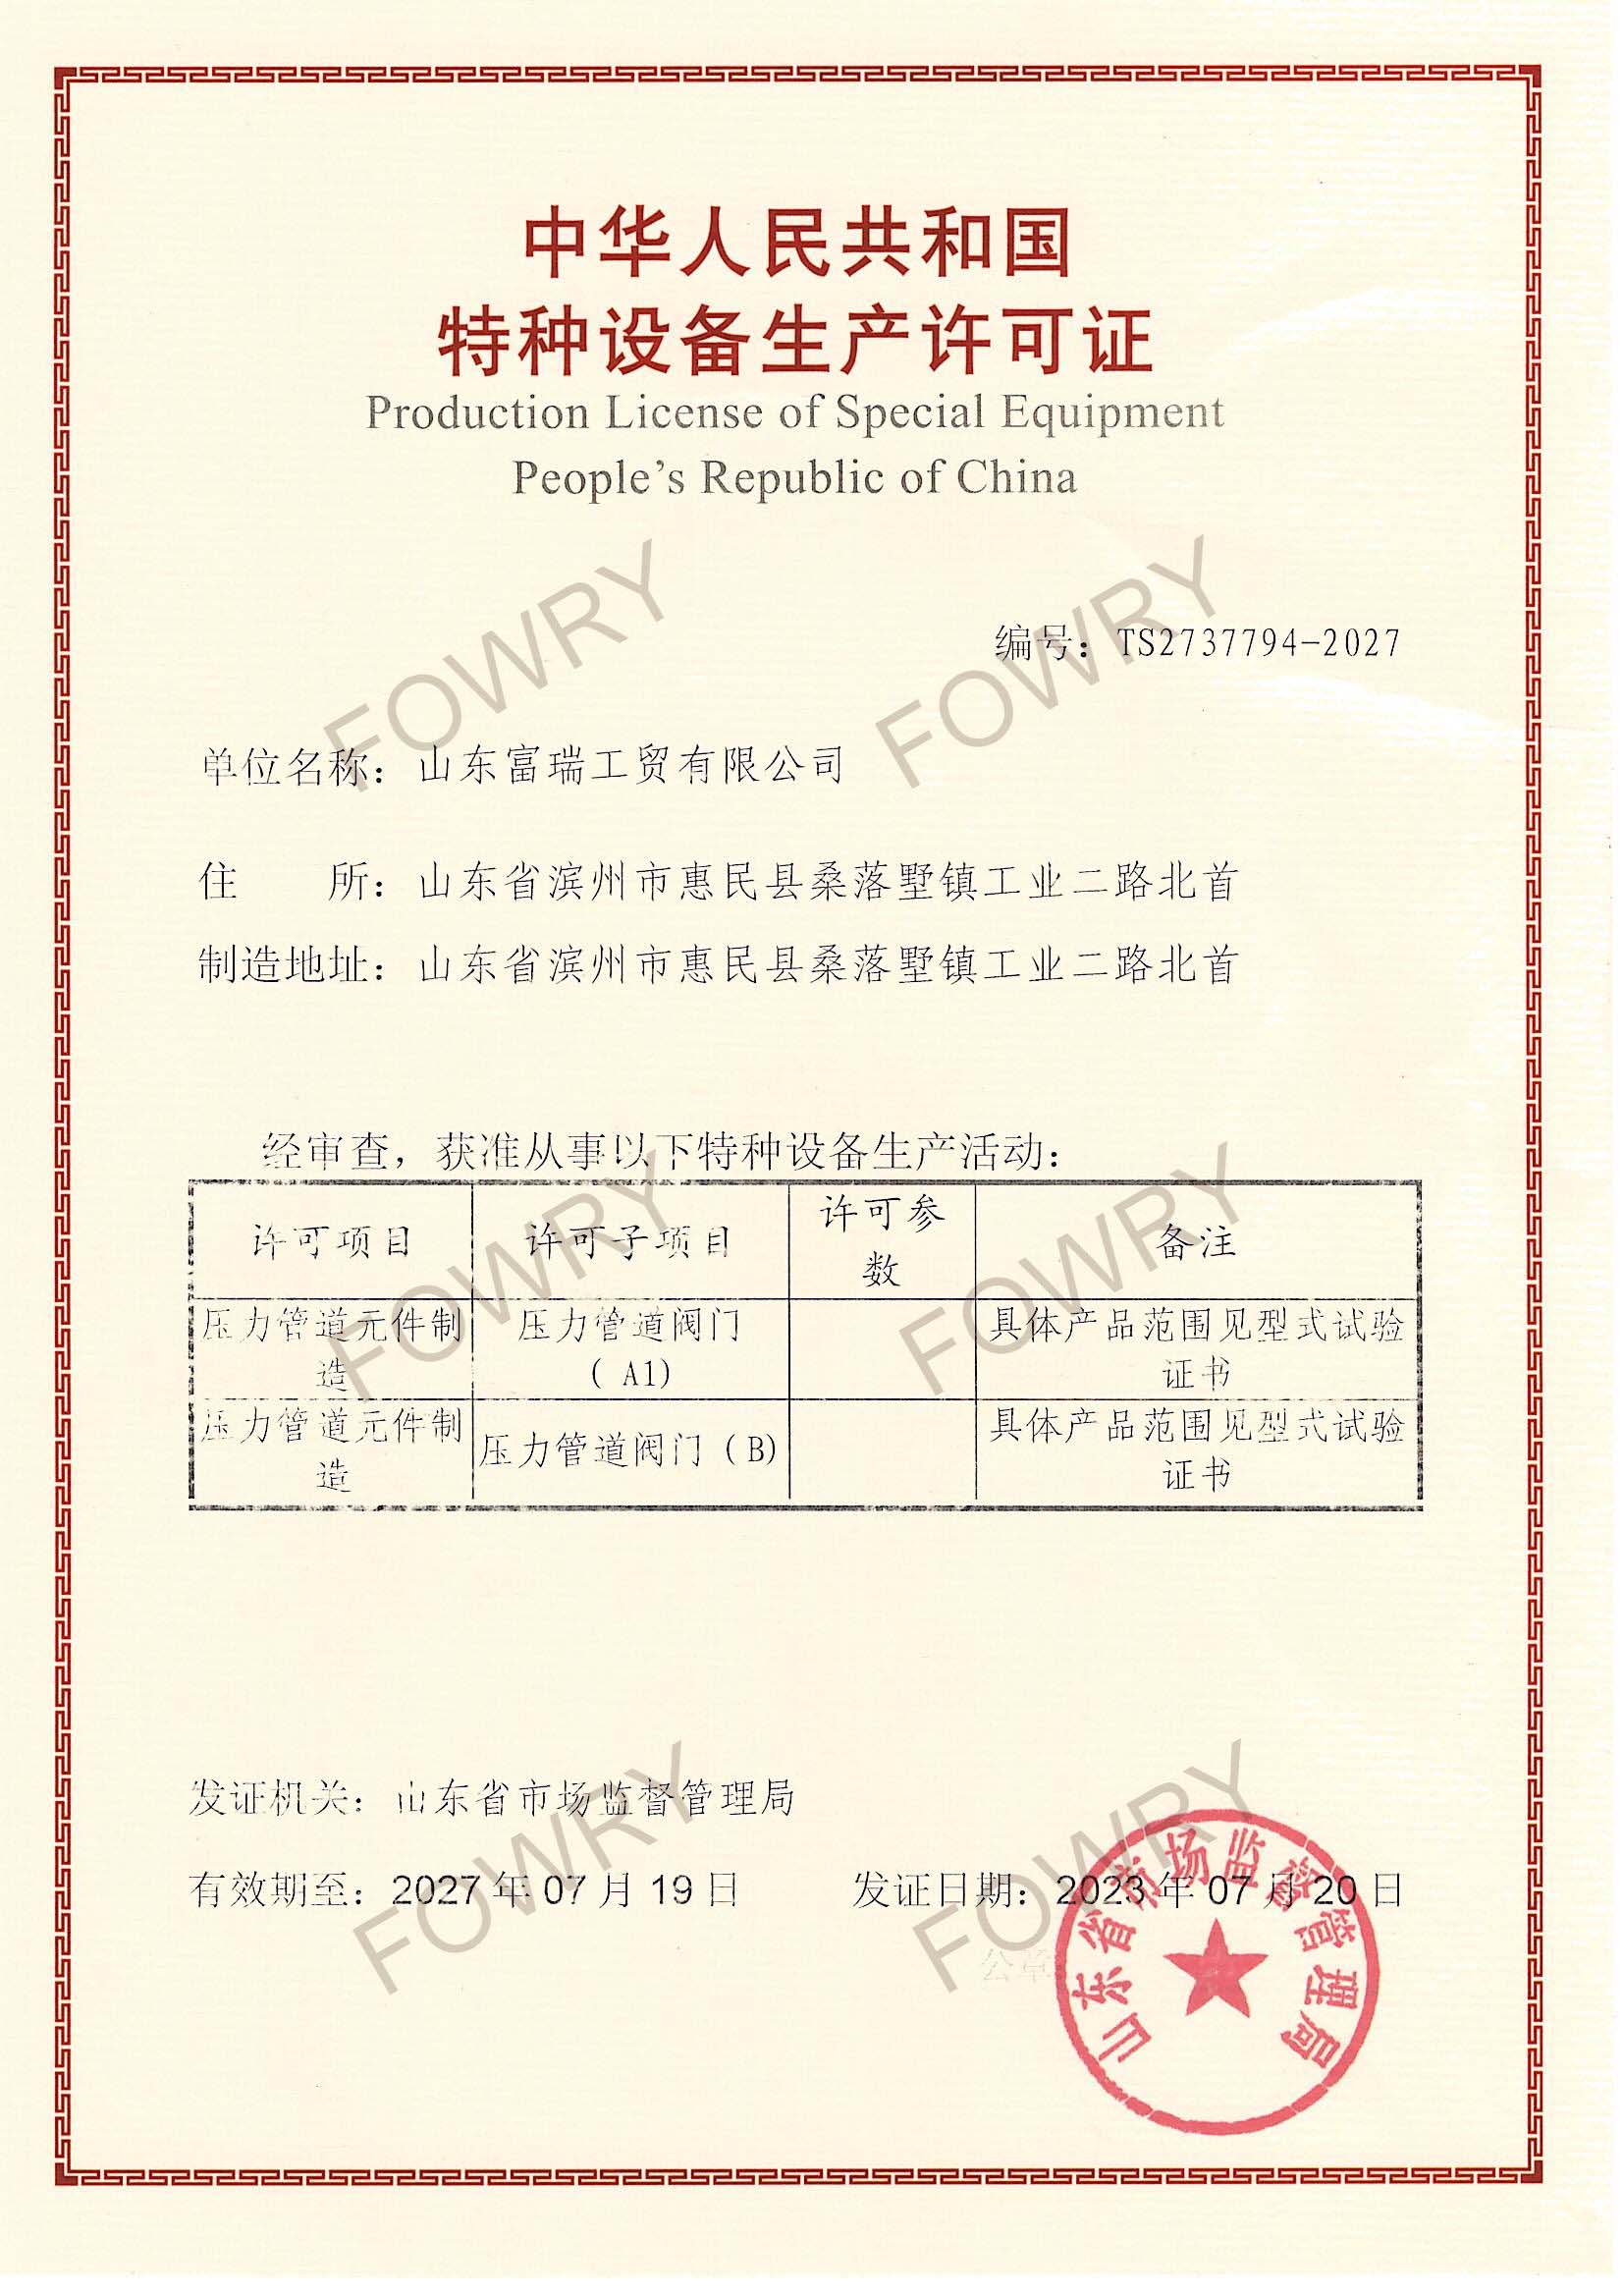 FOWRY TS Certificate